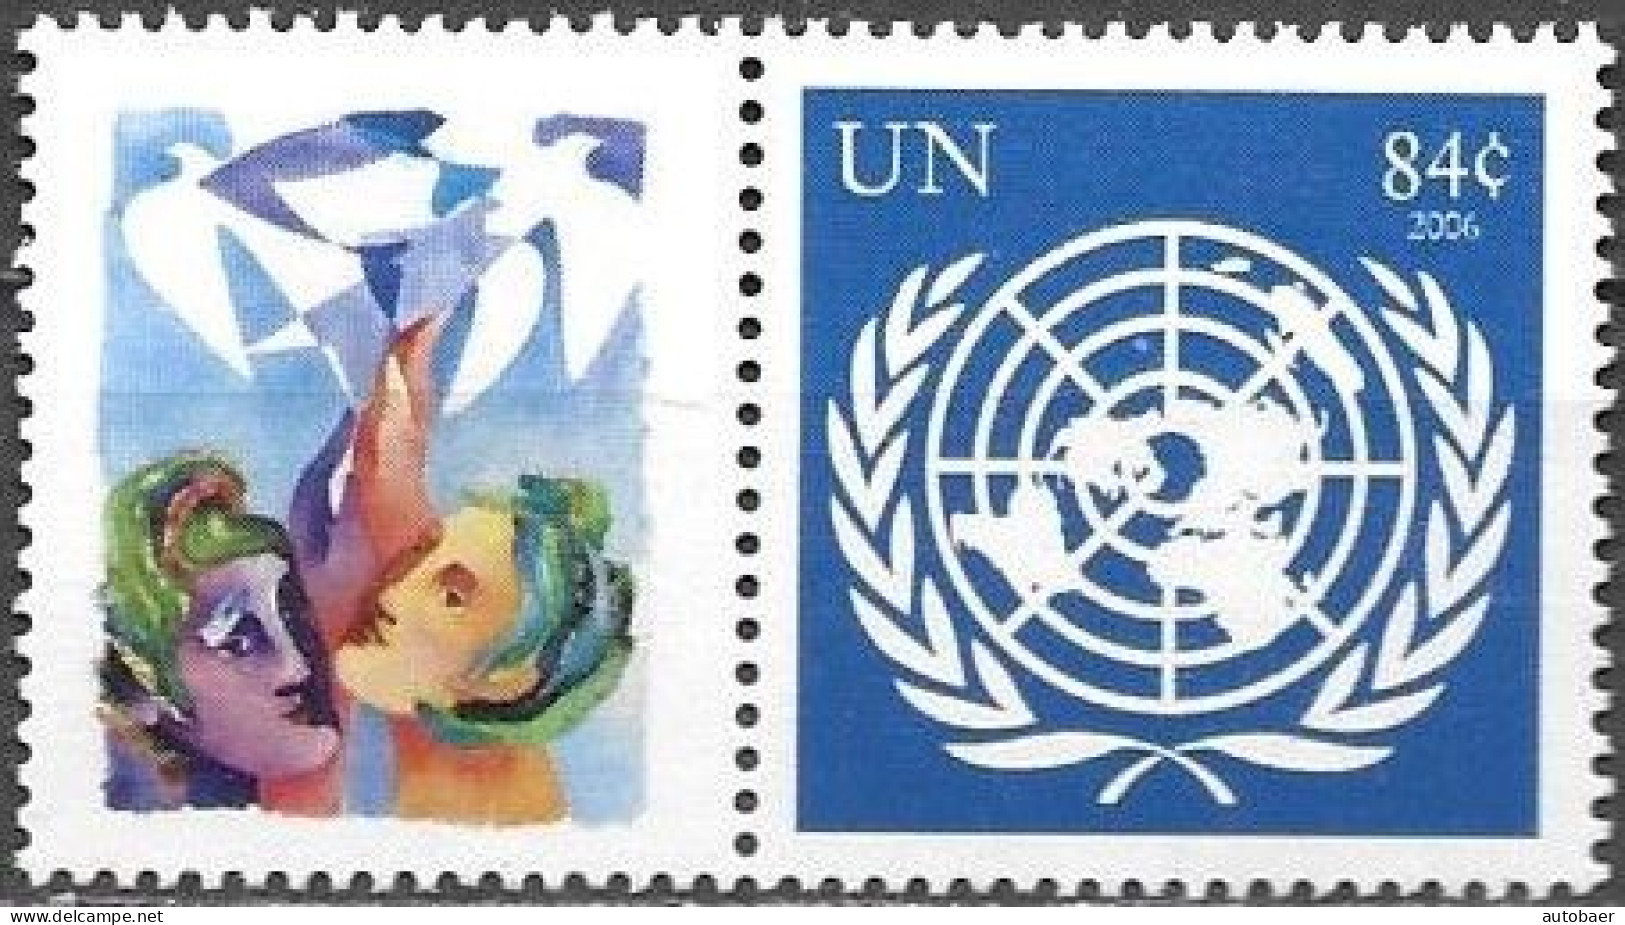 United Nations UNO UN Vereinte Nationen New York 2006 Greetings Mi.No.1032 Label MNH ** Neuf - Neufs